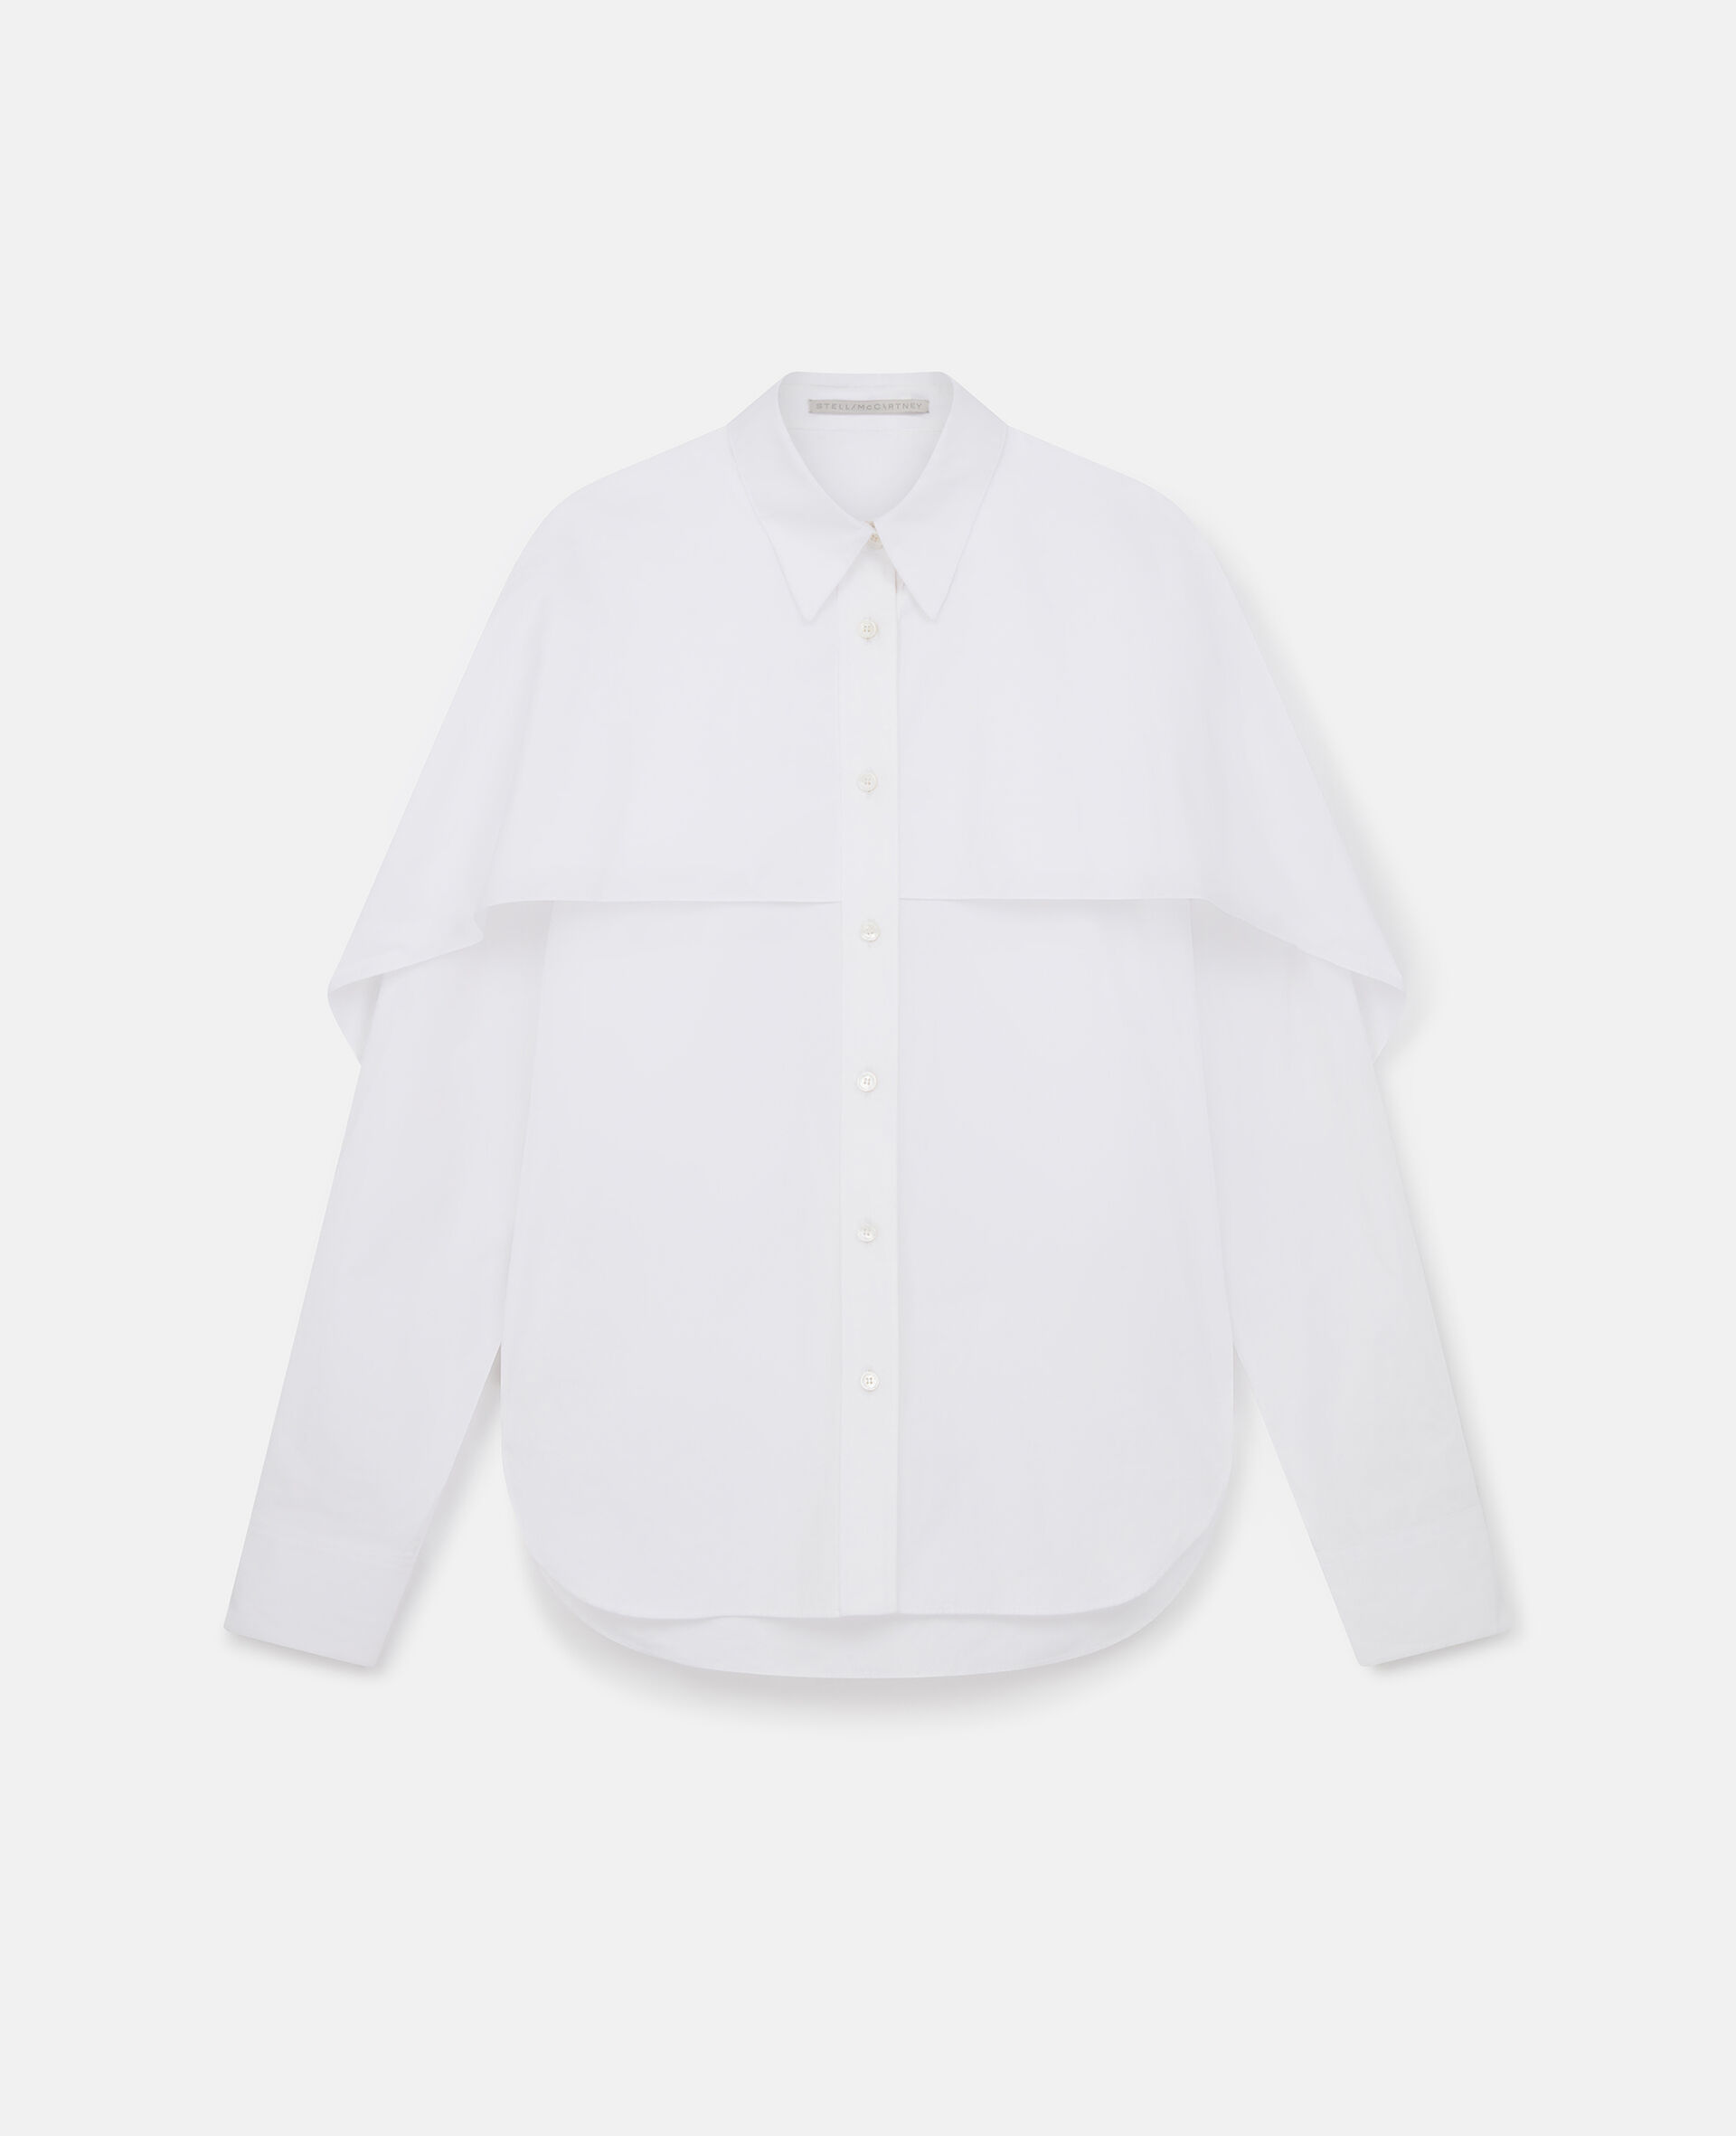 Cape Layer Long Sleeve Shirt-White-large image number 0